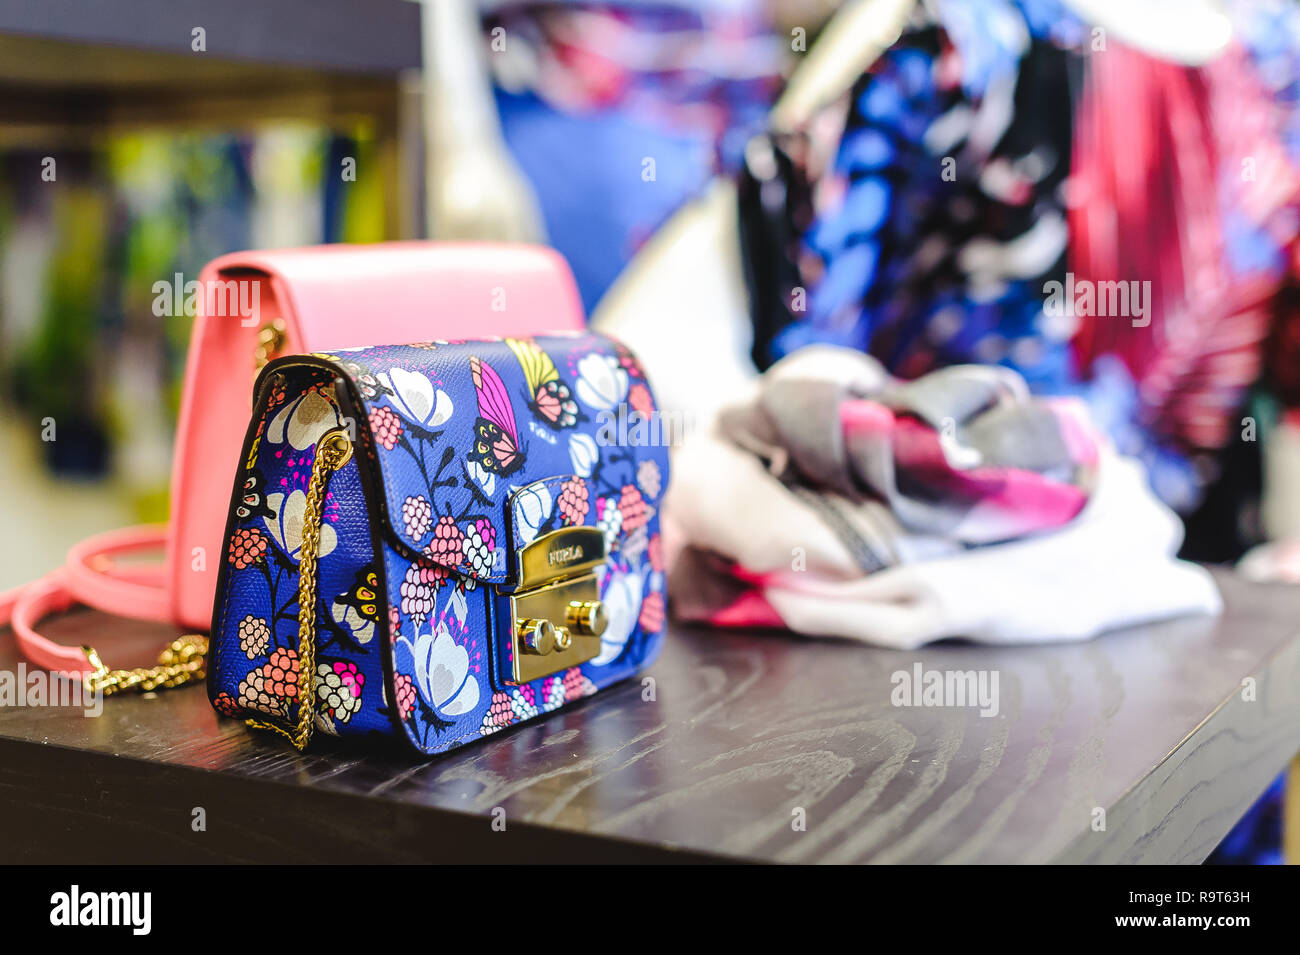 Russia, Novosibirsk - April 25, 2018: interior of women's clothing and accessories store boutique EMPORIO / FURLA handbags ladies bags Stock Photo